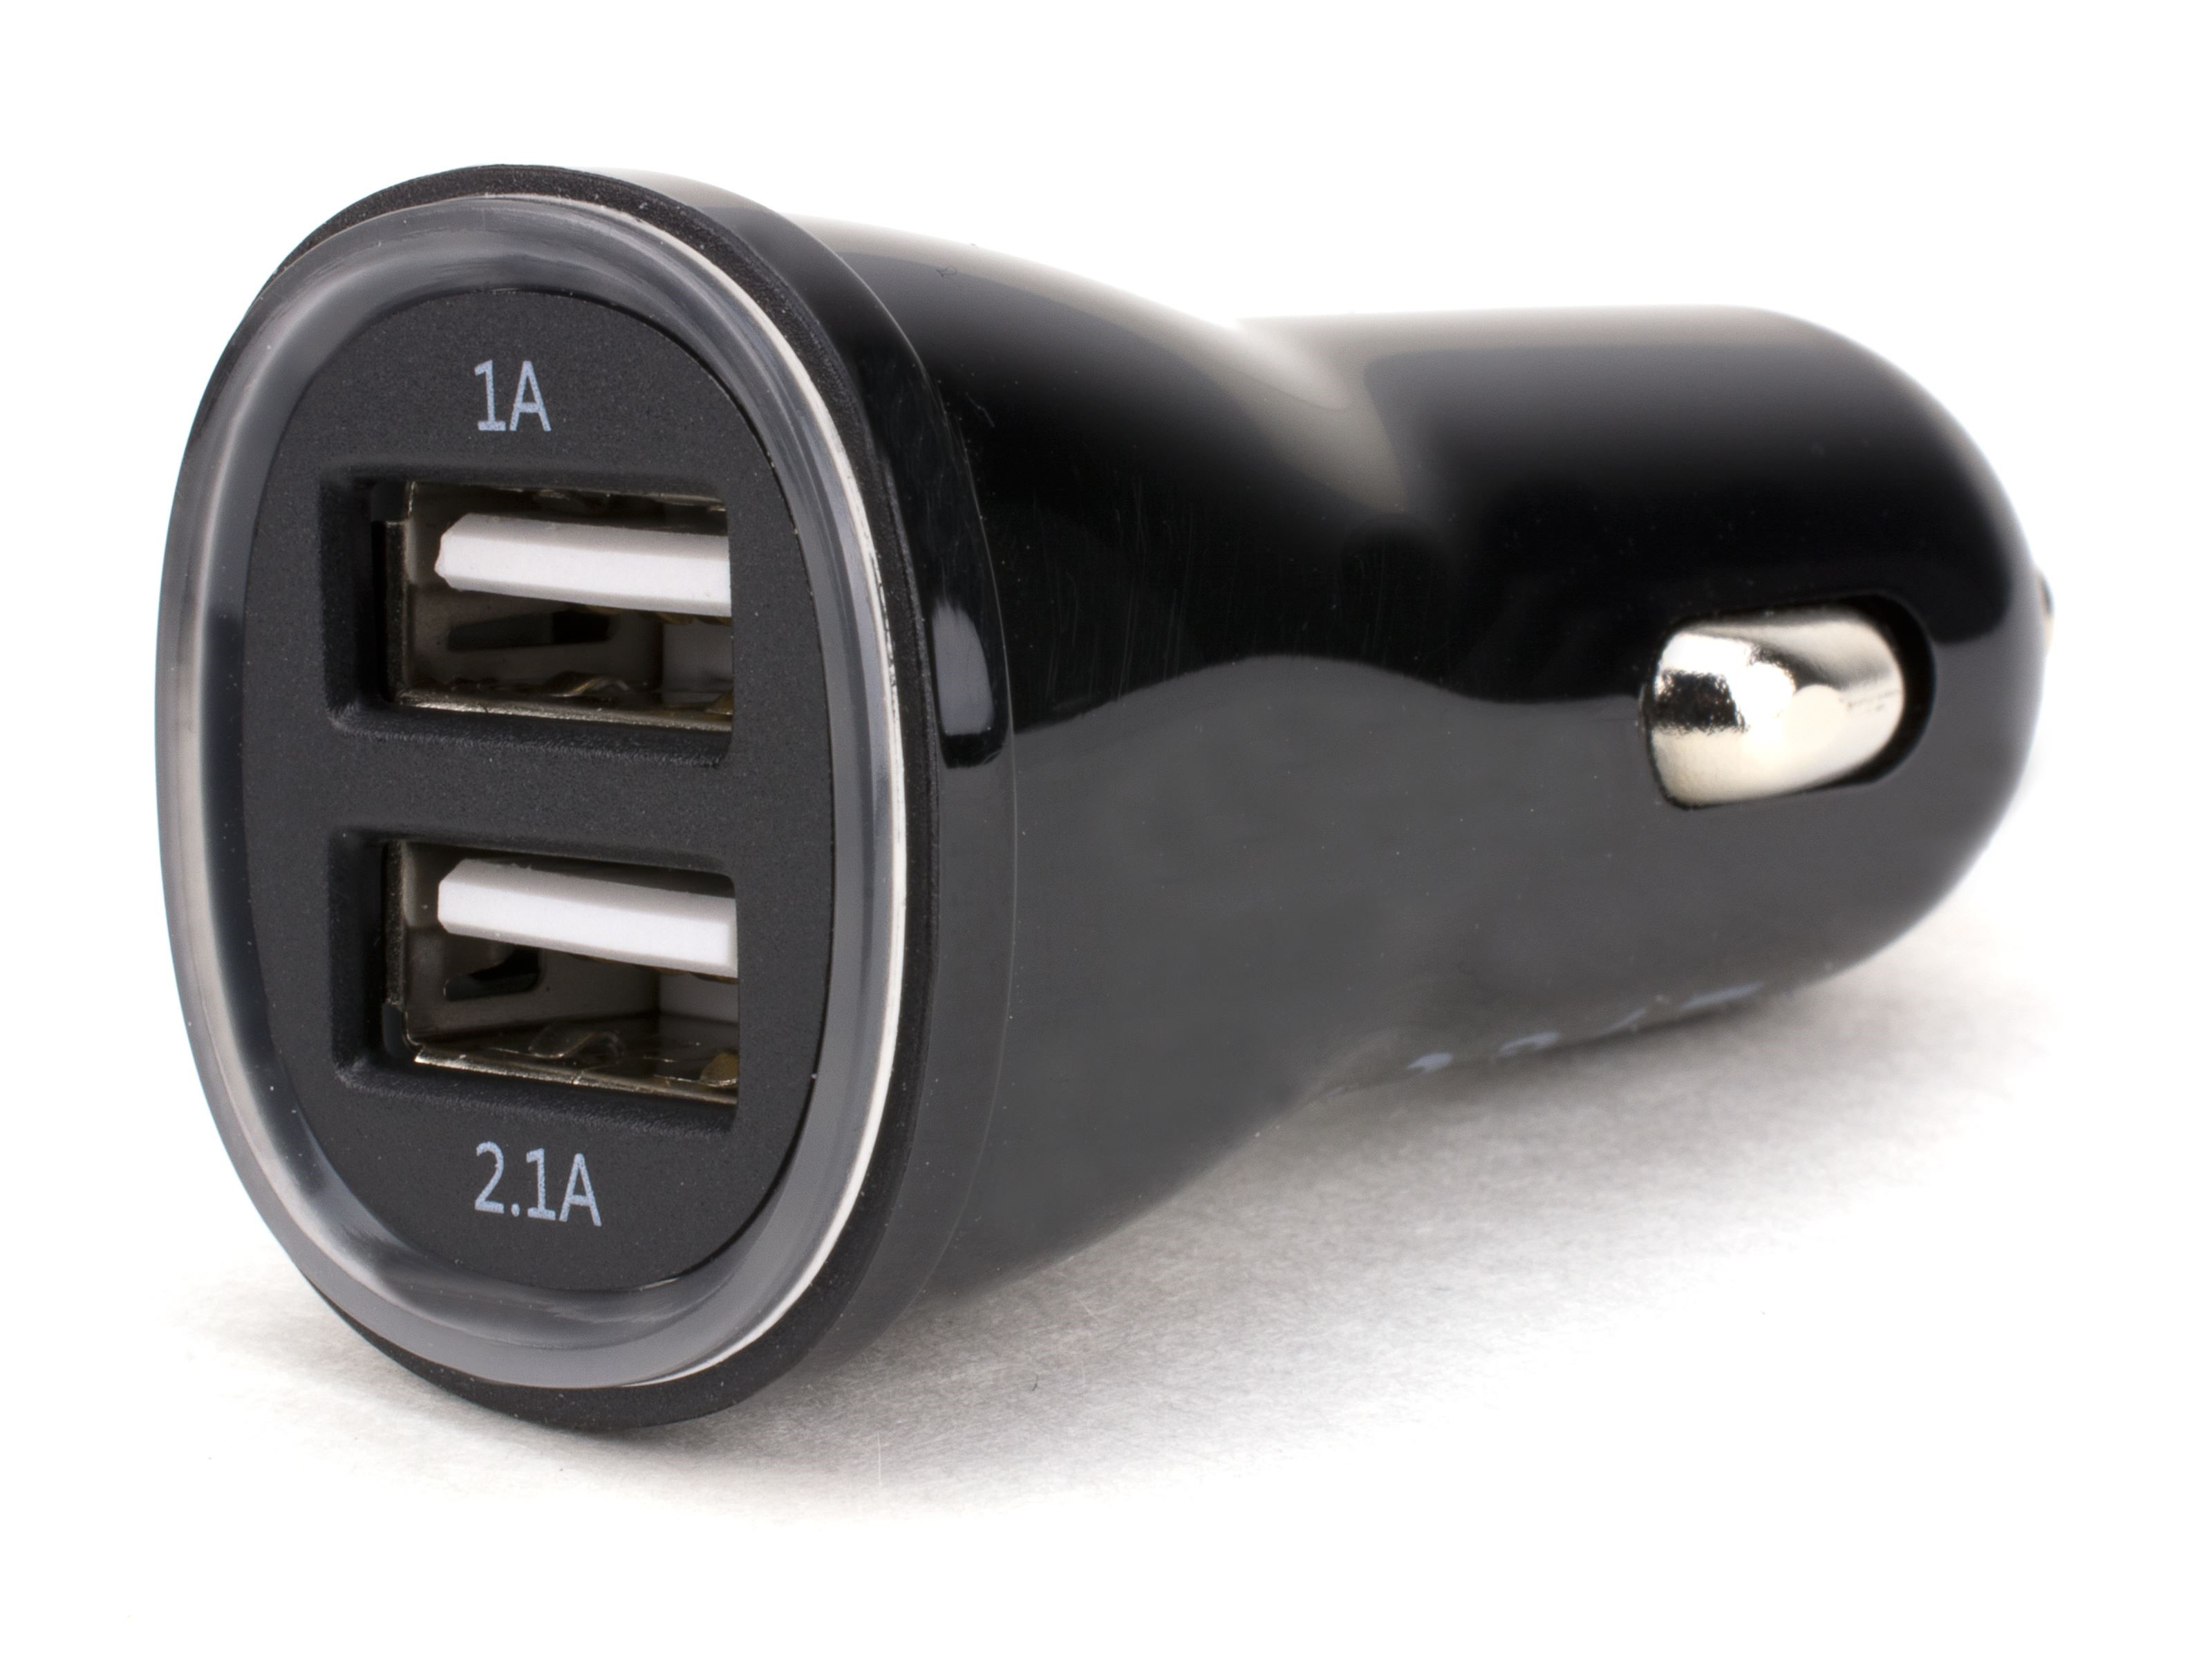 Apparatet perle forene USB Car Charger - 2 Port, 5V 1A/2.1A, Black - Vivid AV® Official Site